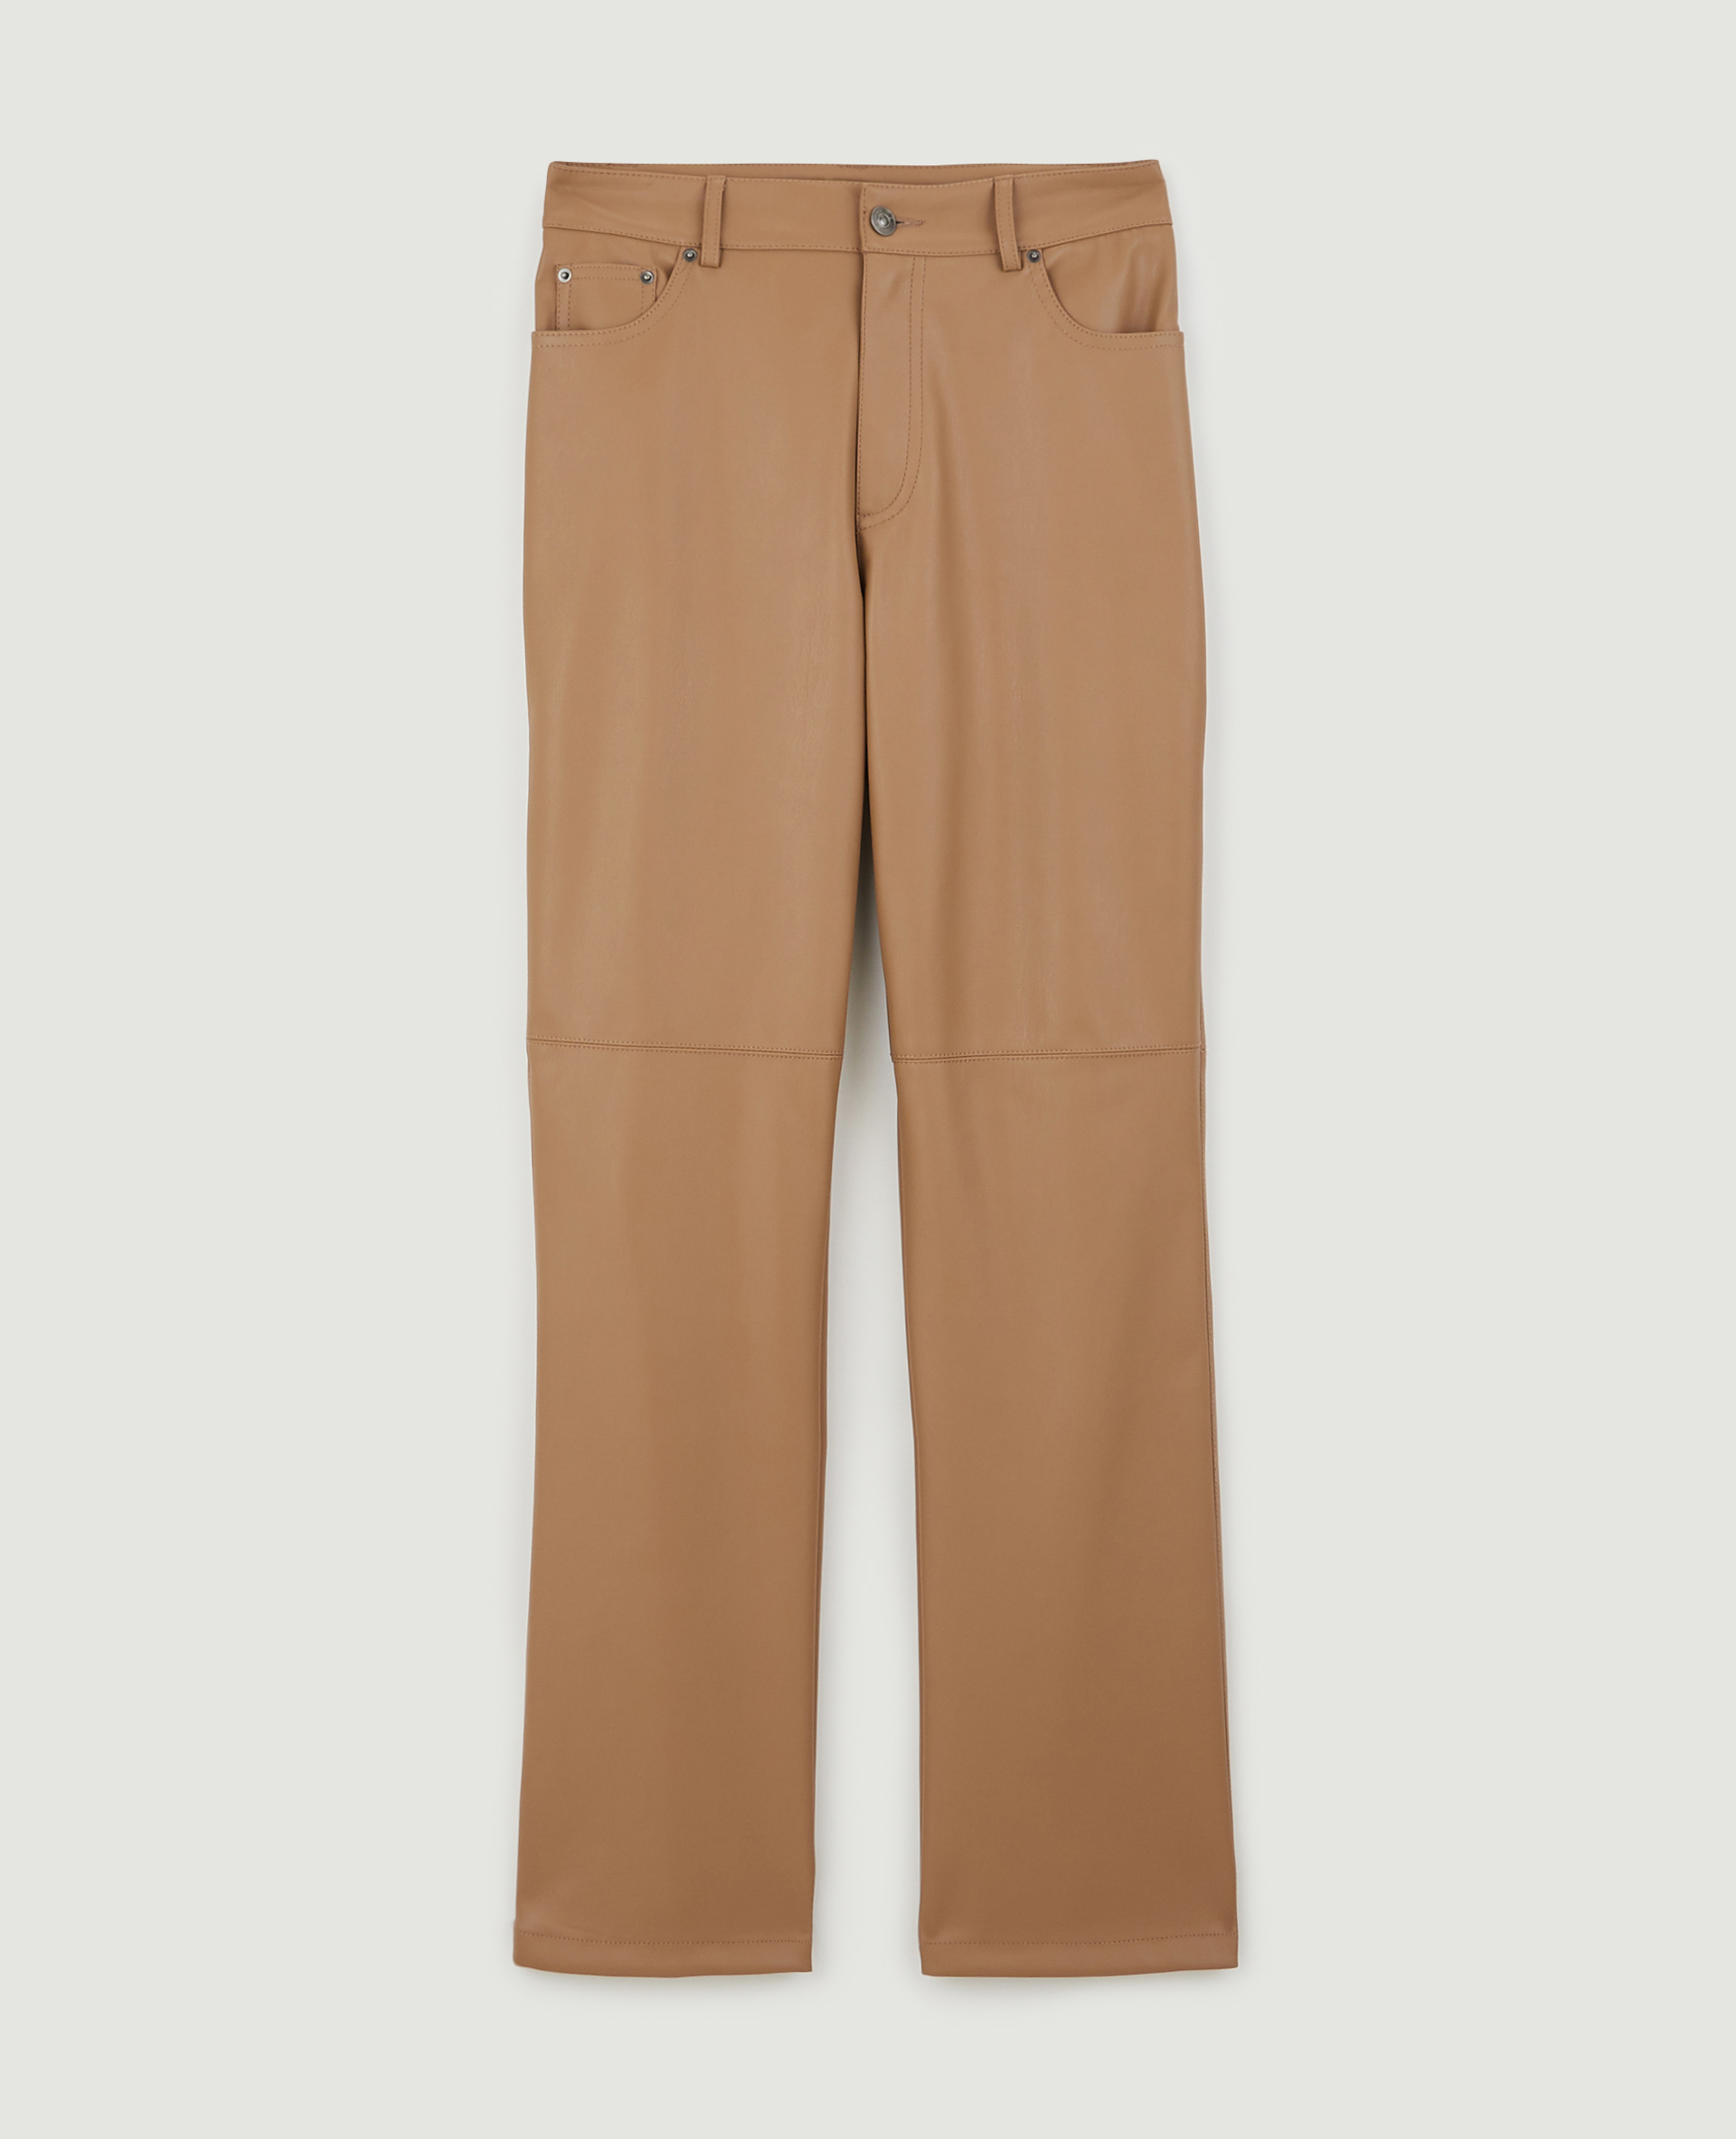 Pantalon simili cuir beige - Pimkie